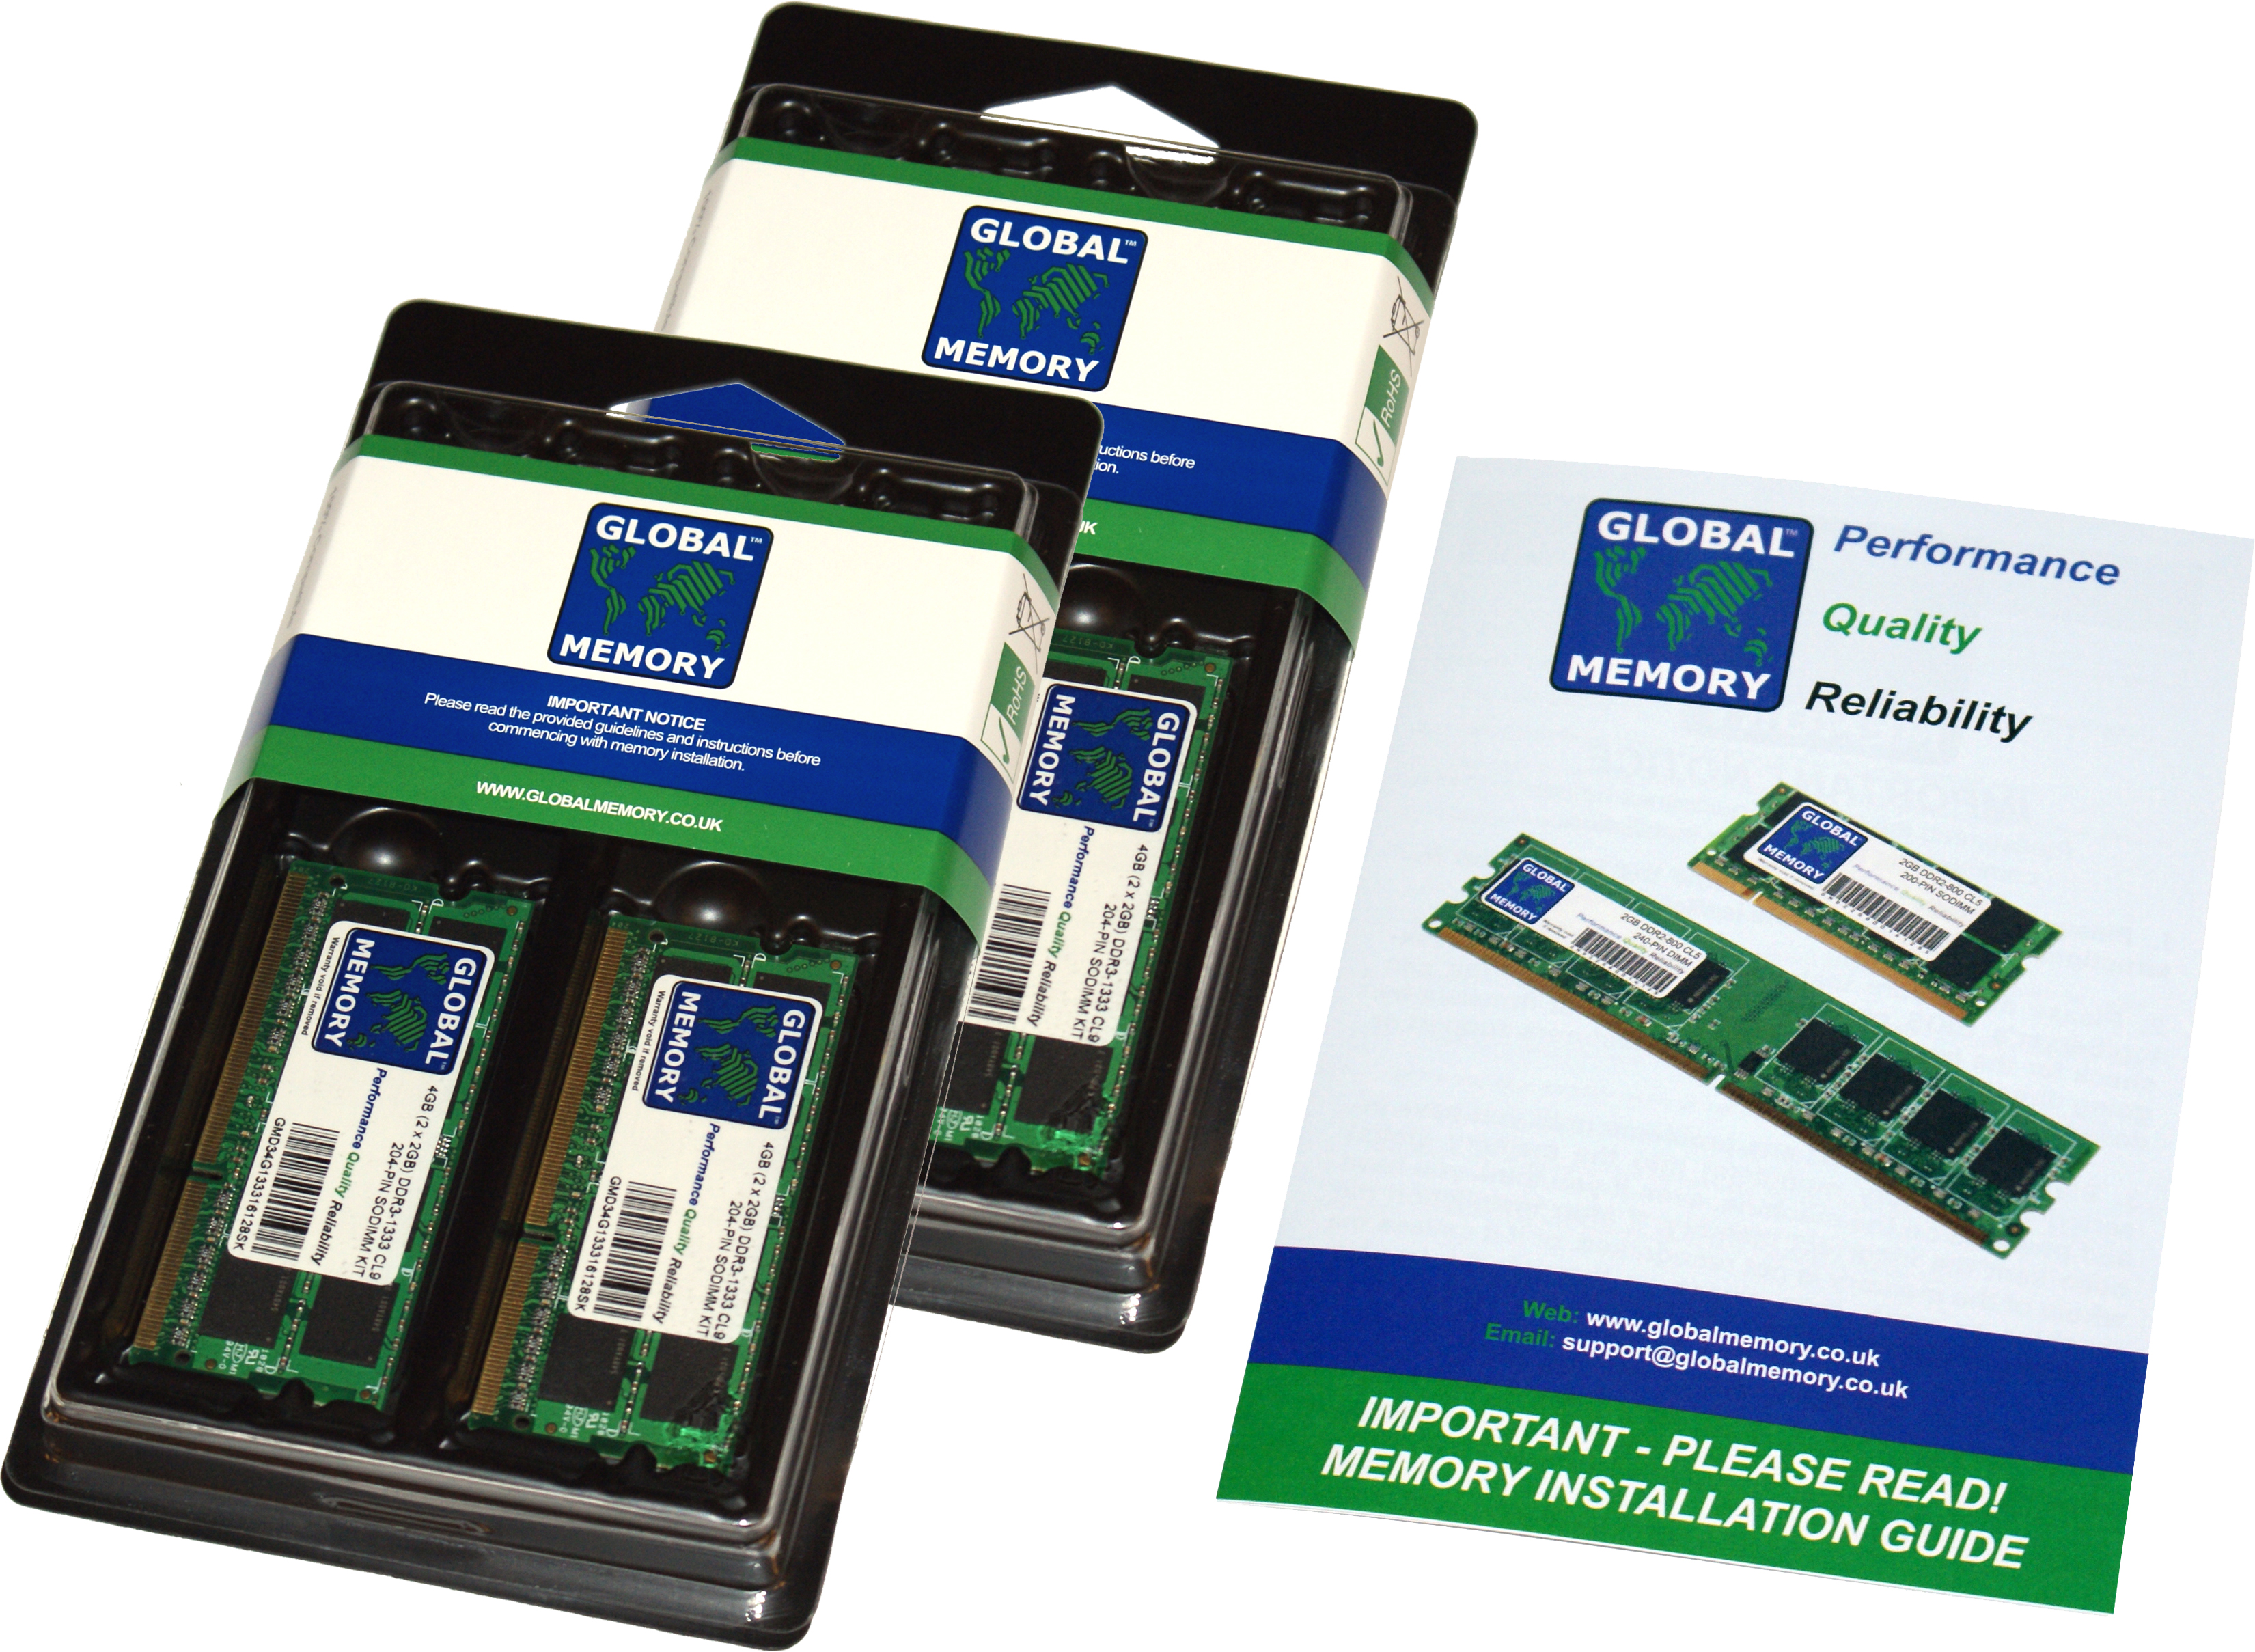 32GB (2 x 16GB) DDR4 2666MHz PC4-21300 260-PIN SODIMM MEMORY RAM KIT FOR INTEL MAC MINI (2018)